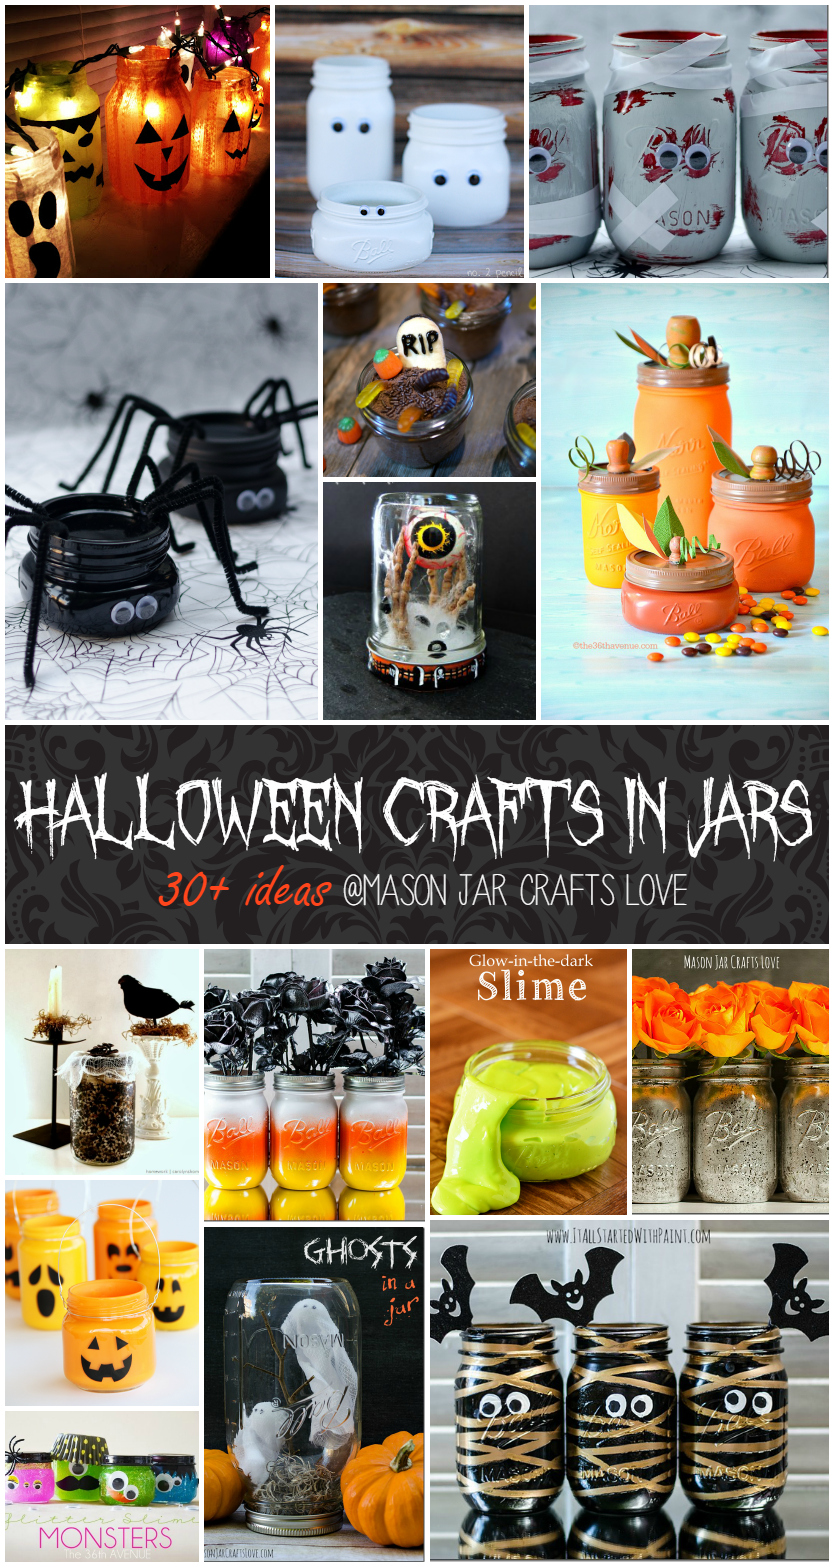 Mason Jar Craft Ideas for Halloween